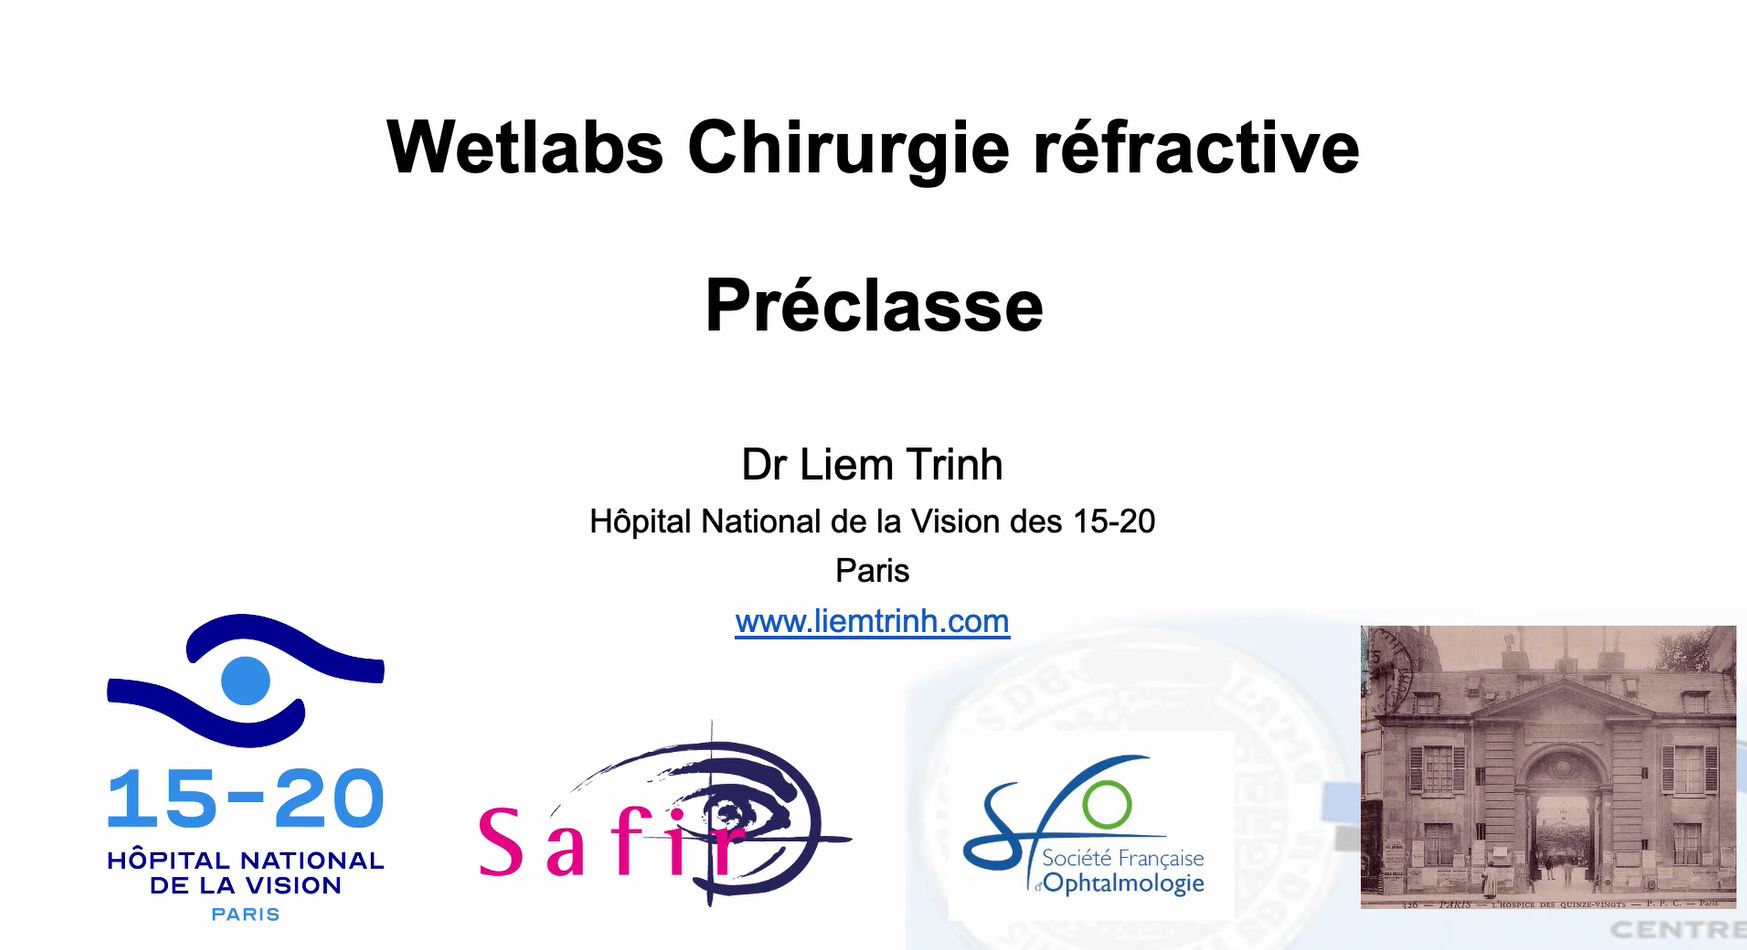 cover - Wetlabs SFO Preclass Chirurgie Refractive Laser Liem-Trinh